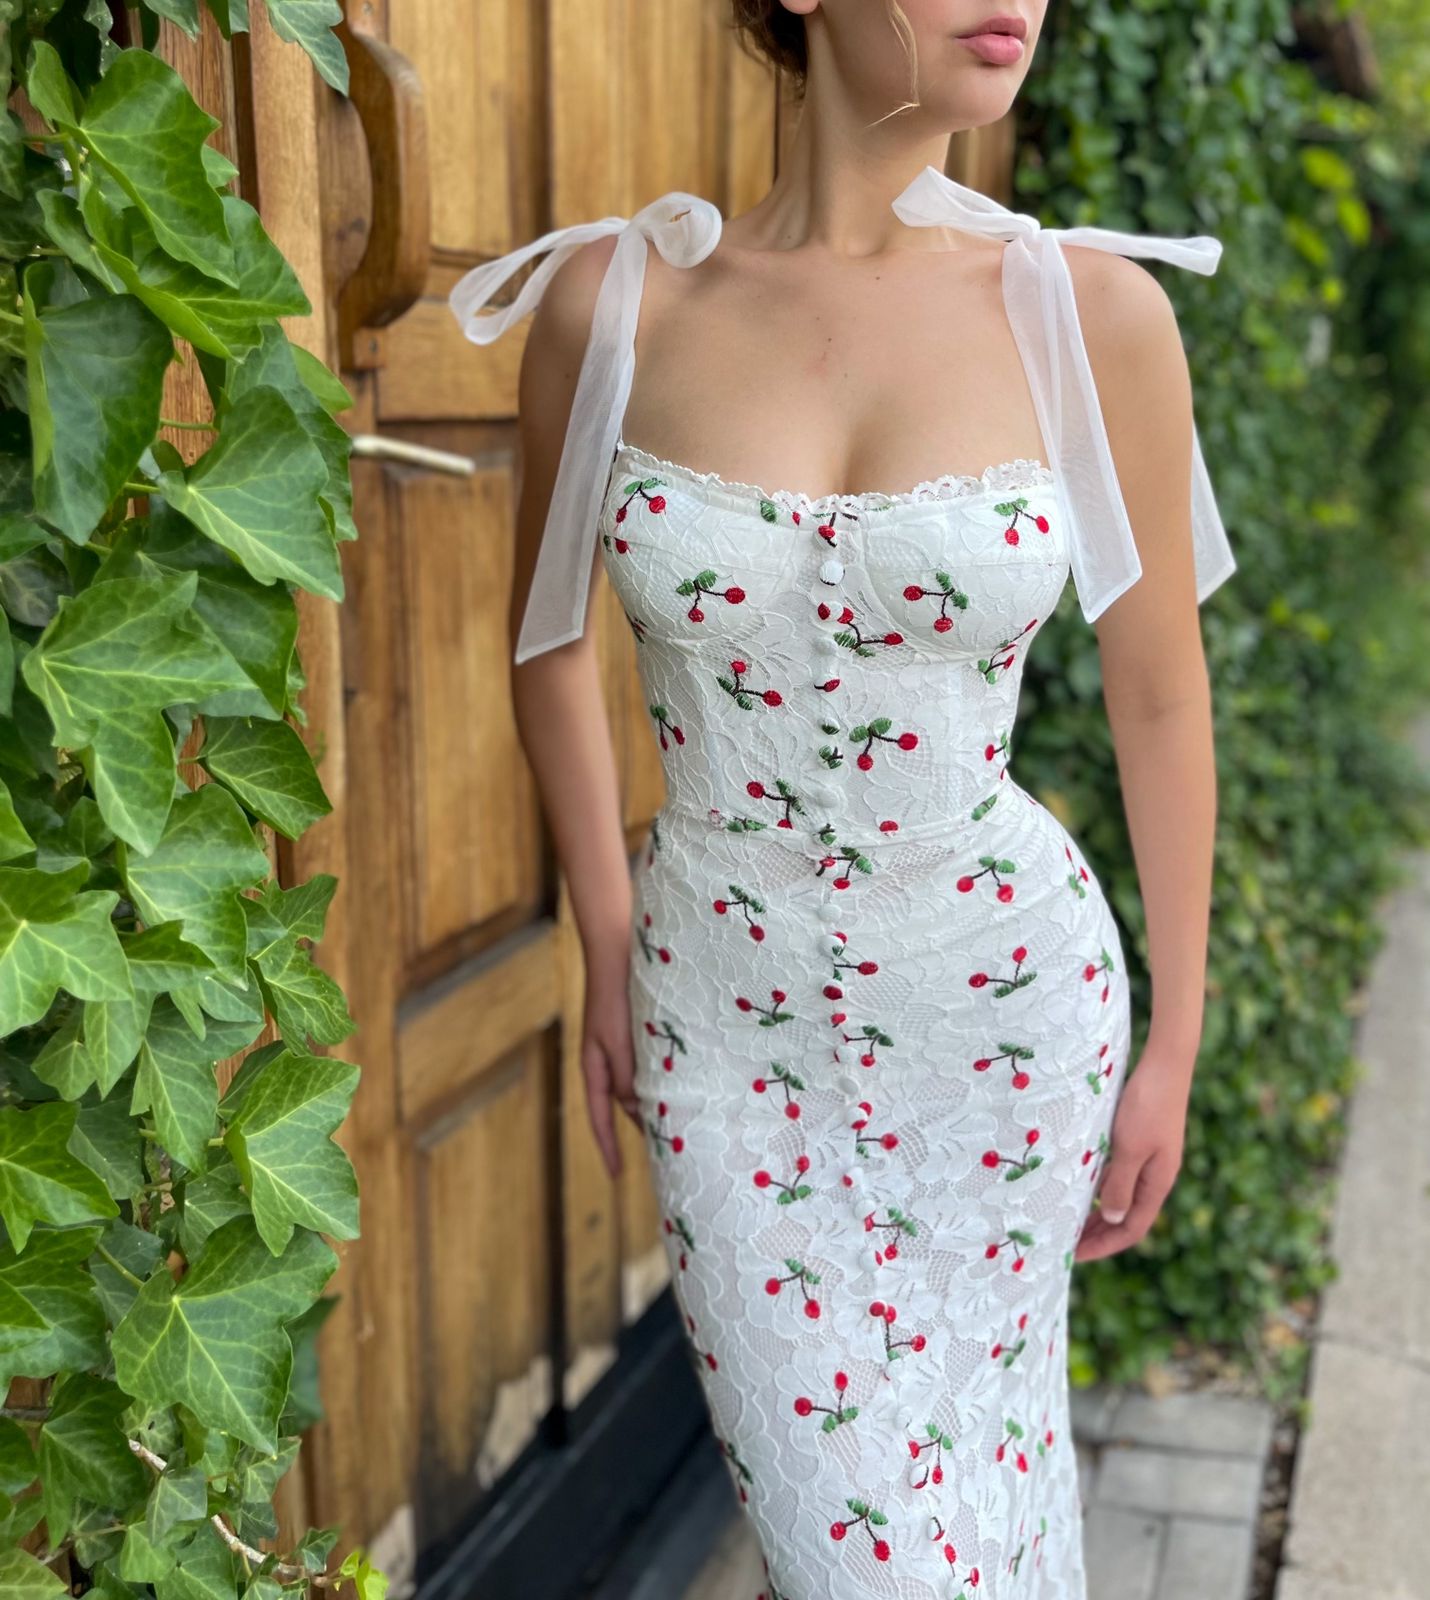 White mermaid dress with spaghetti straps and cherries